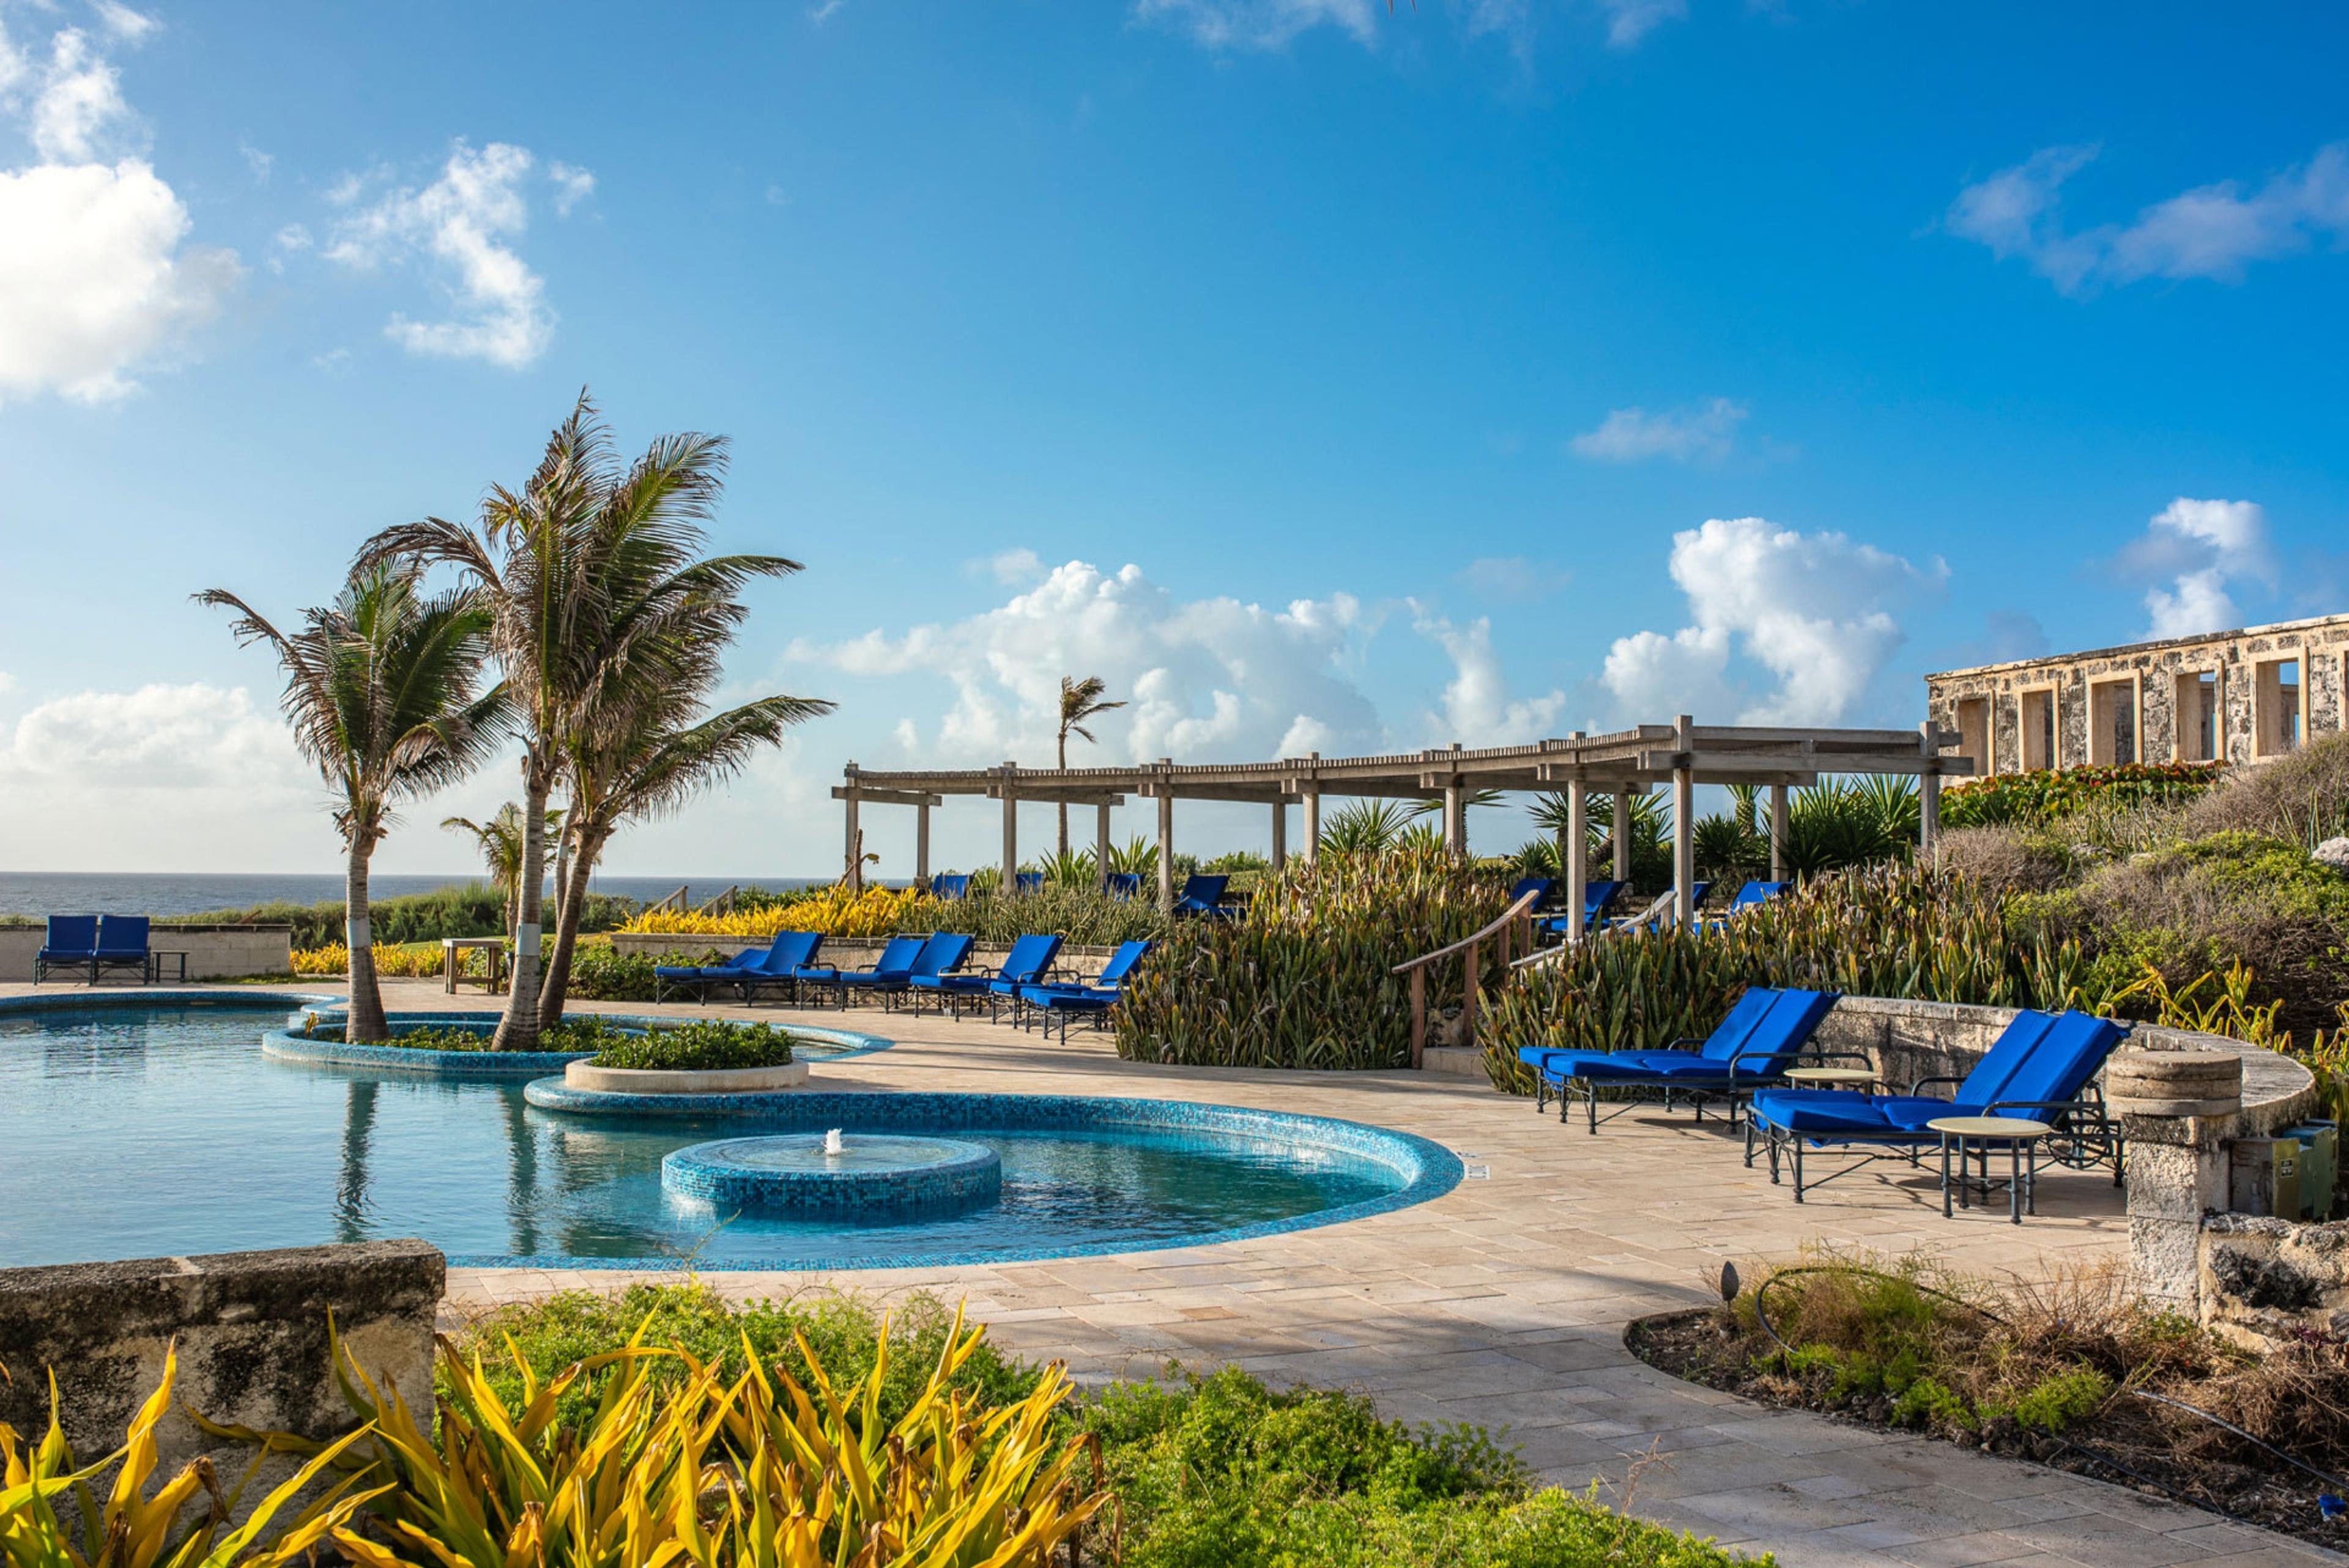 The Crane Resort, Barbados